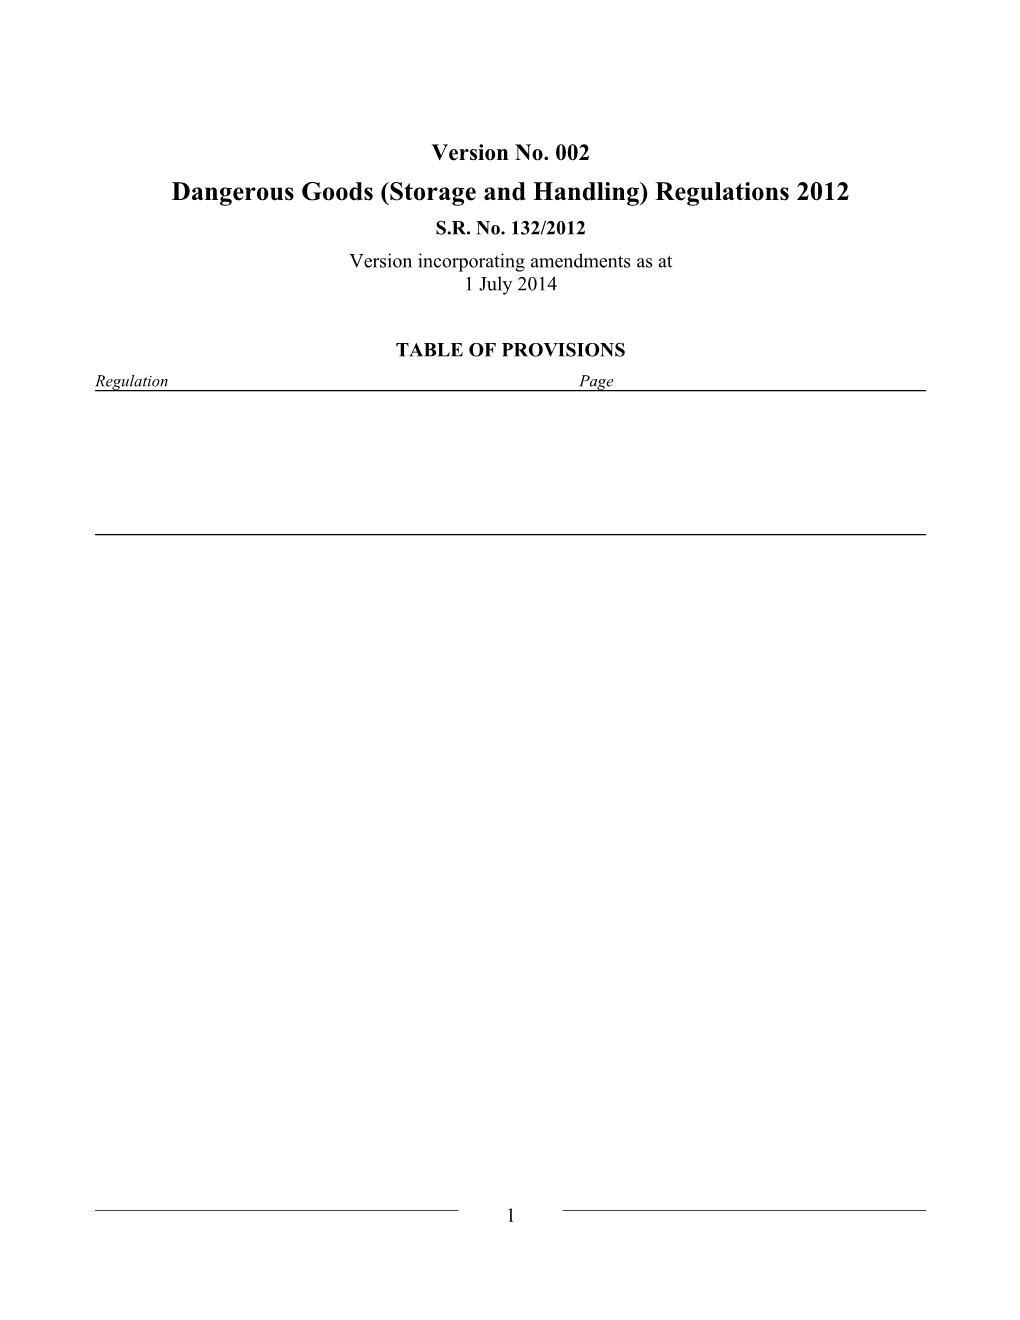 Dangerous Goods (Storage and Handling) Regulations 2012